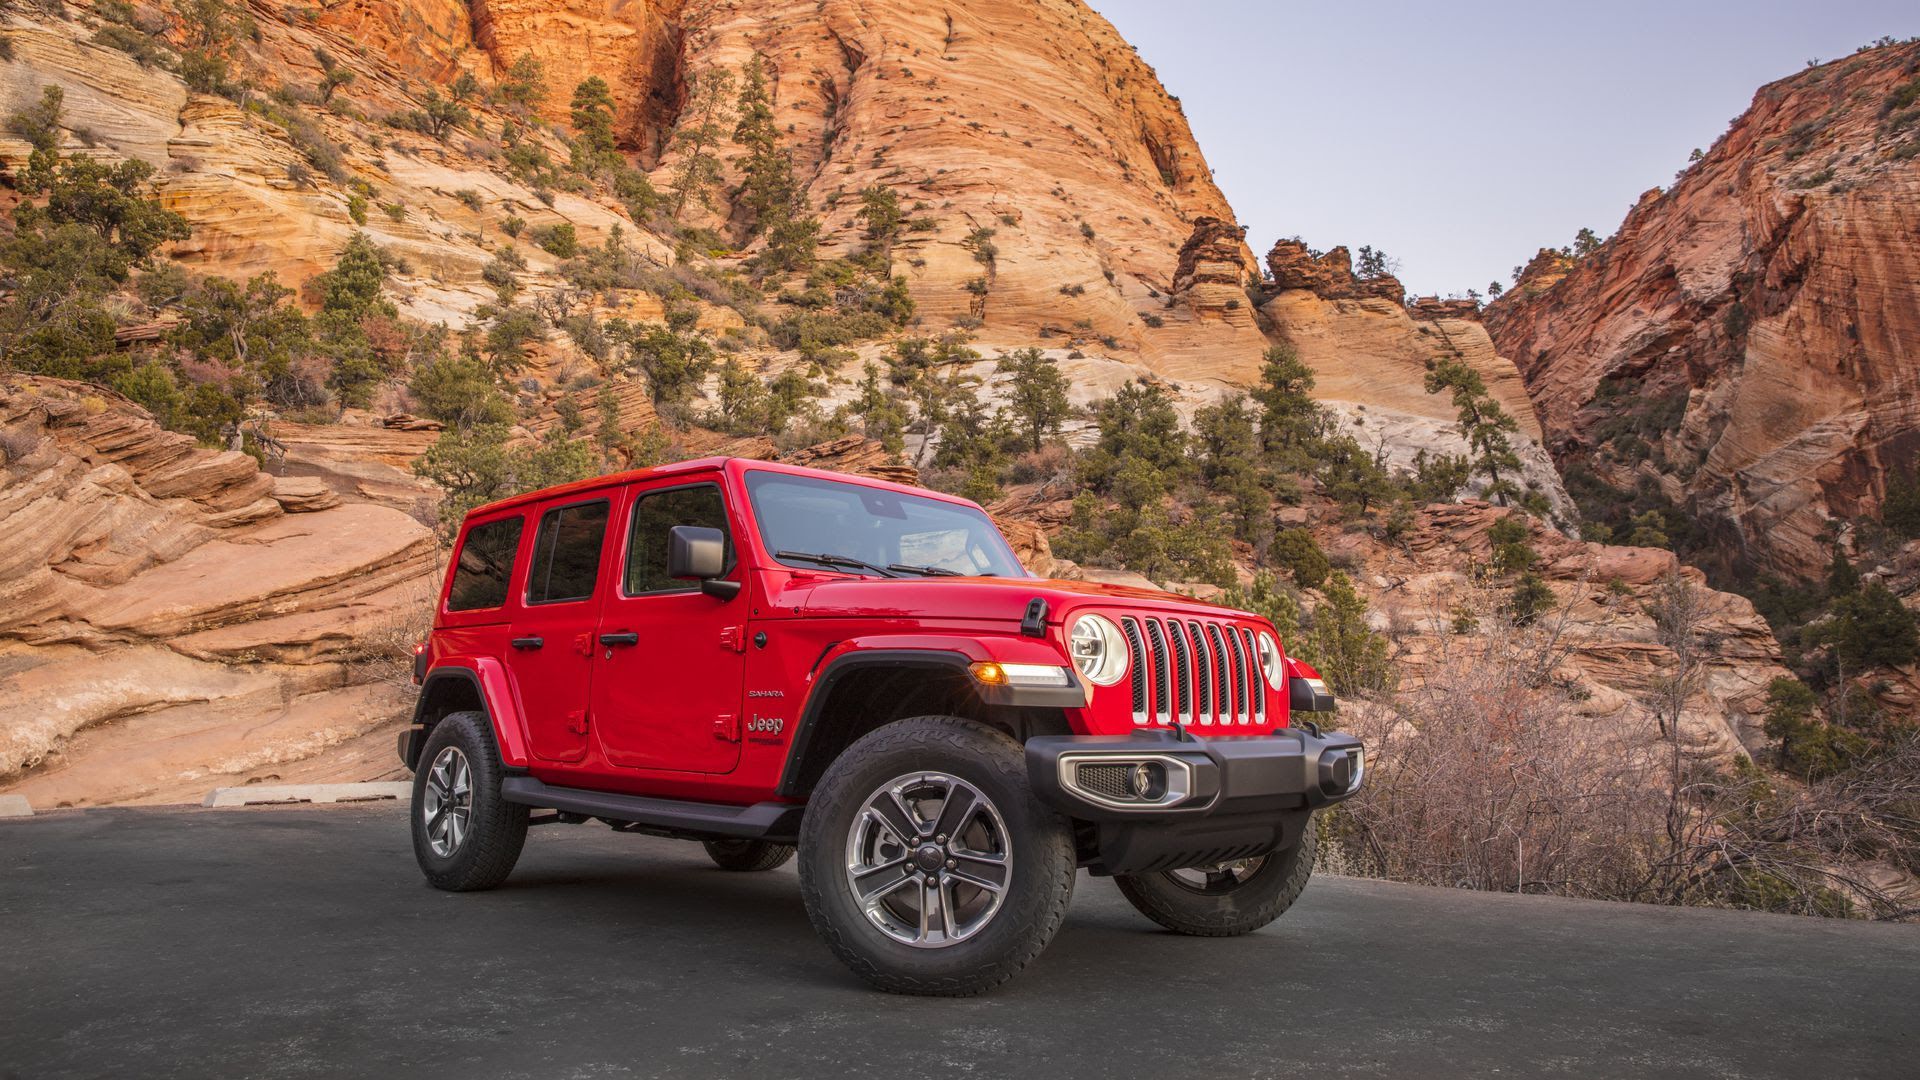 What we're driving: 2020 Jeep Wrangler Sahara Ecodiesel